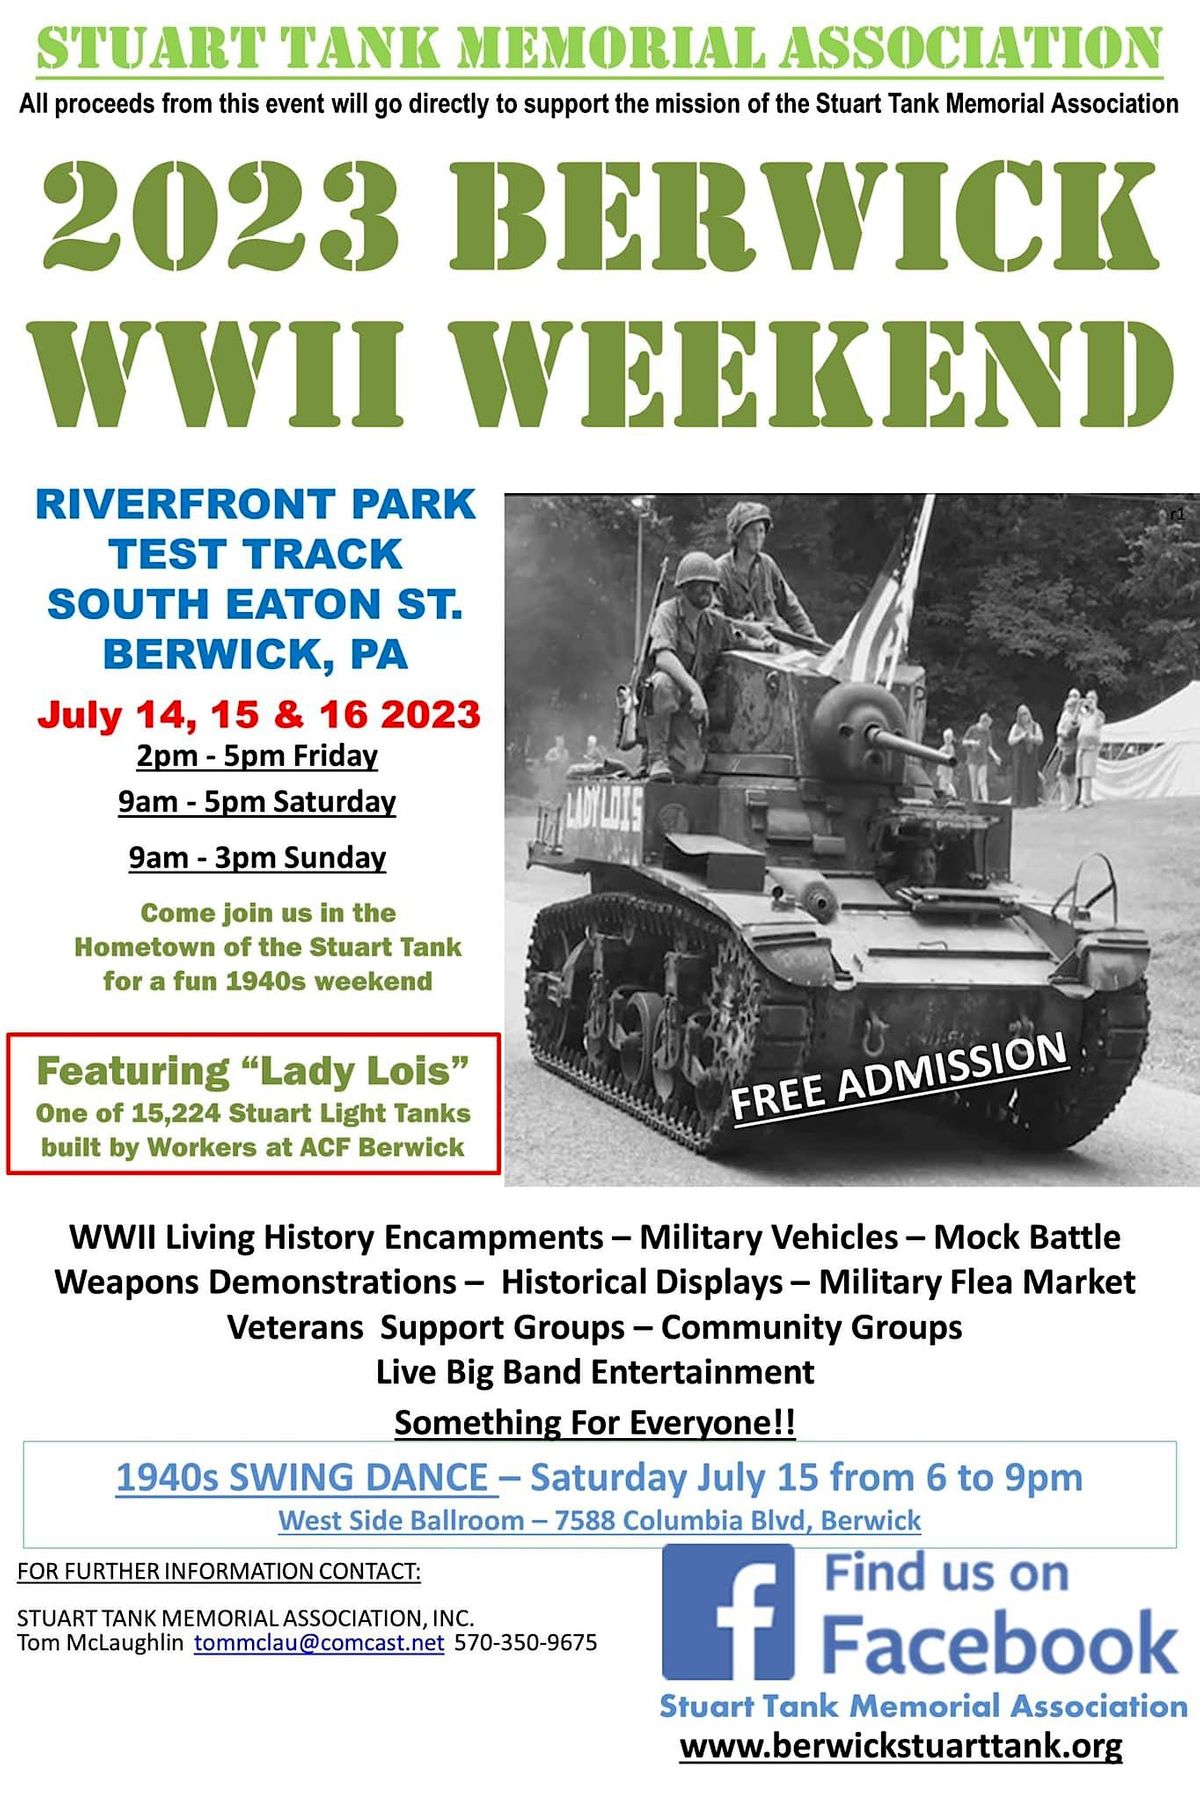 WWII Weekend Berwick PA 2023 Test Track Park, Berwick, PA July 14